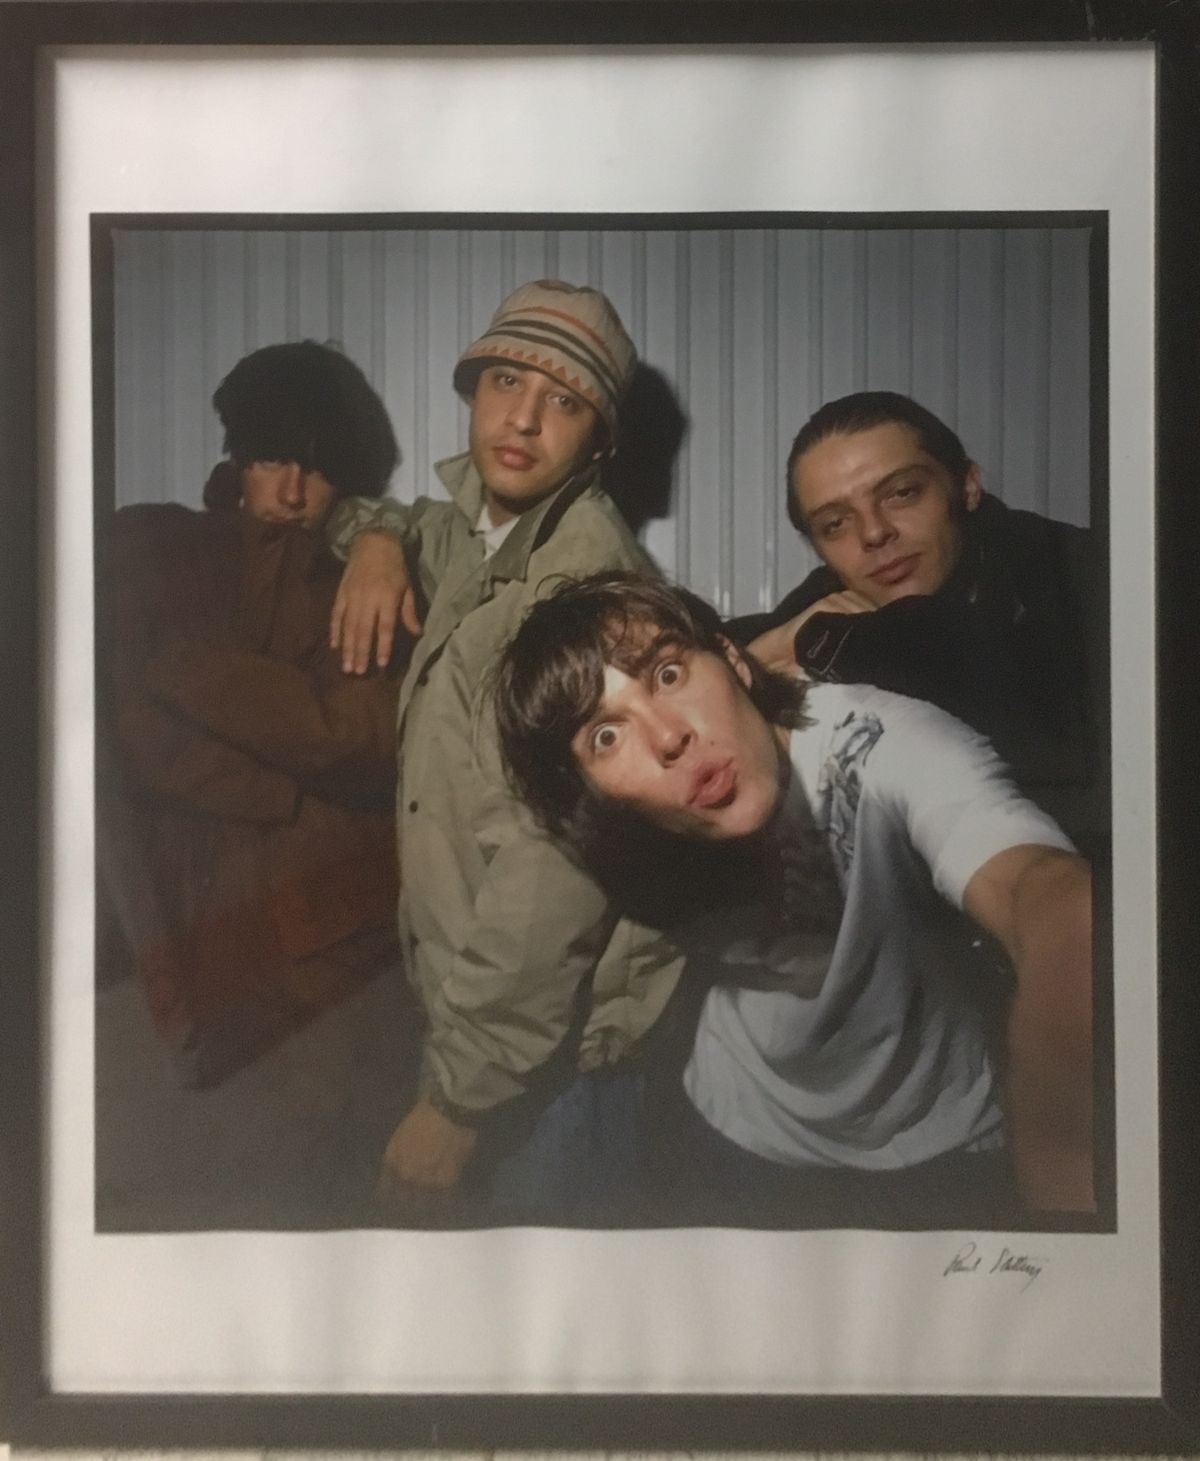 Stone Roses - shinaira, tokyo. october 1989. 10/50 - paul slattery